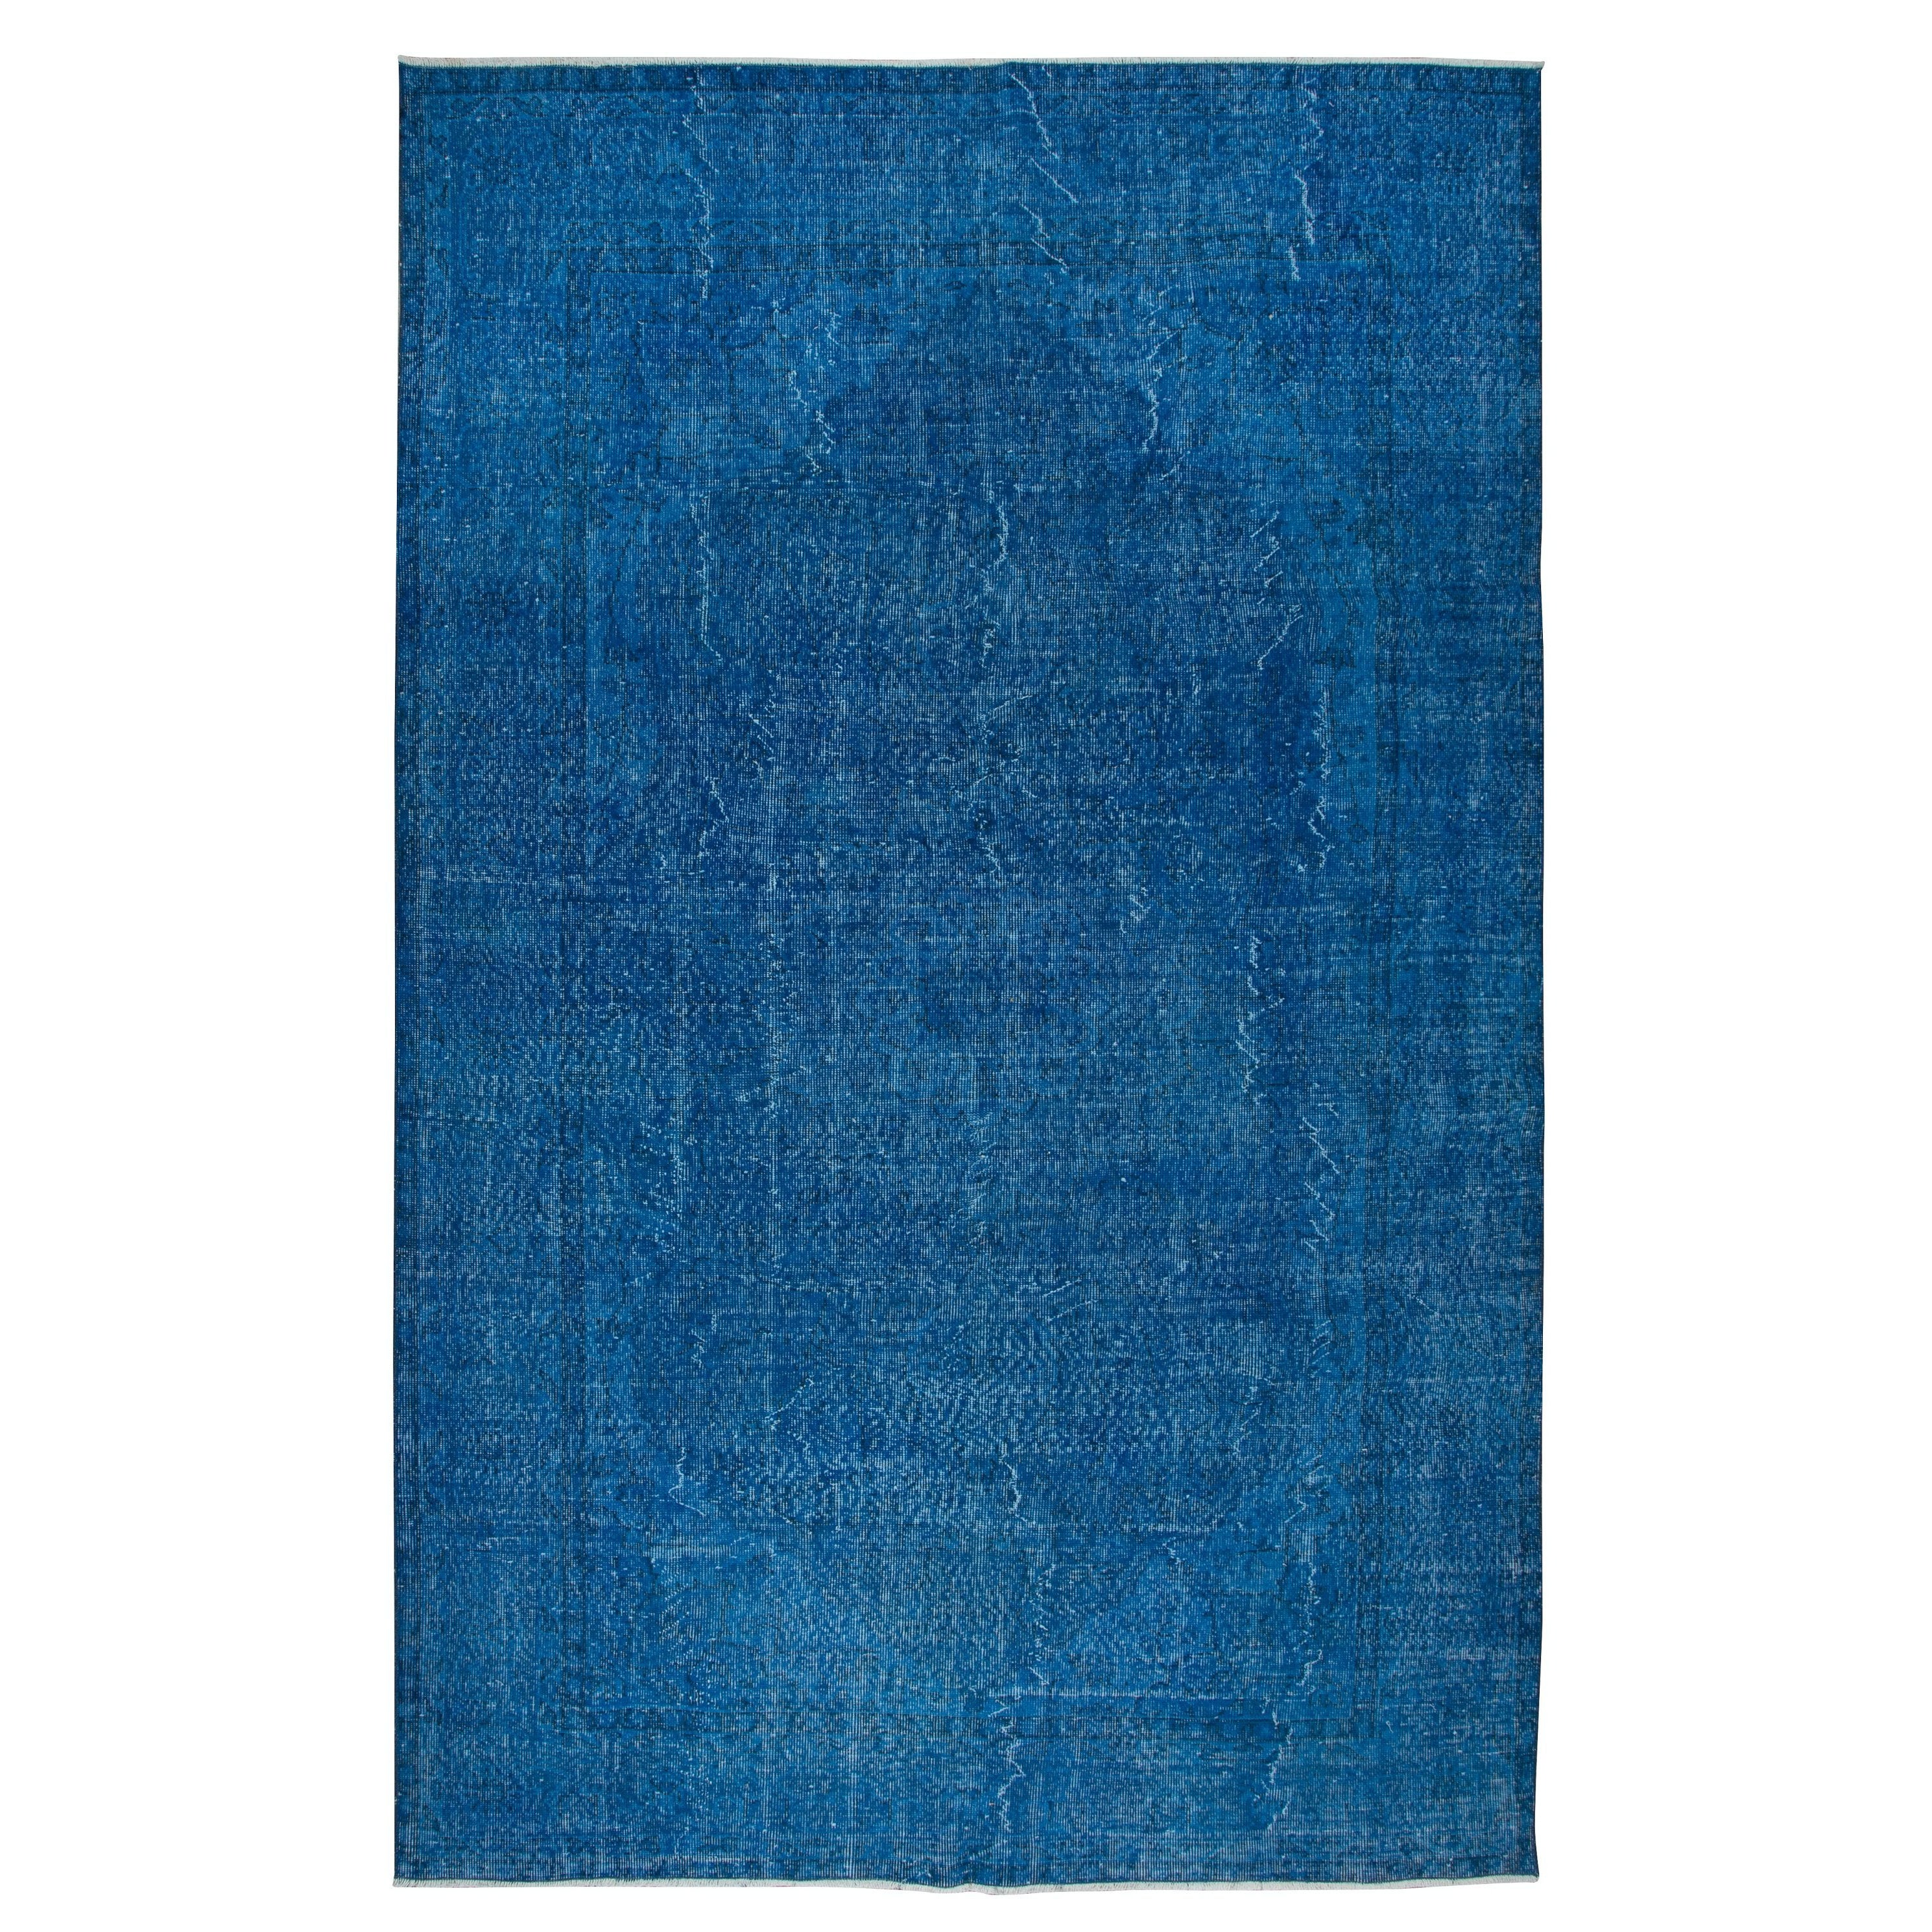 7x10.3 Ft Plain Blue Handmade Turkish Rug for Living Room, Bedroom, Dining Room